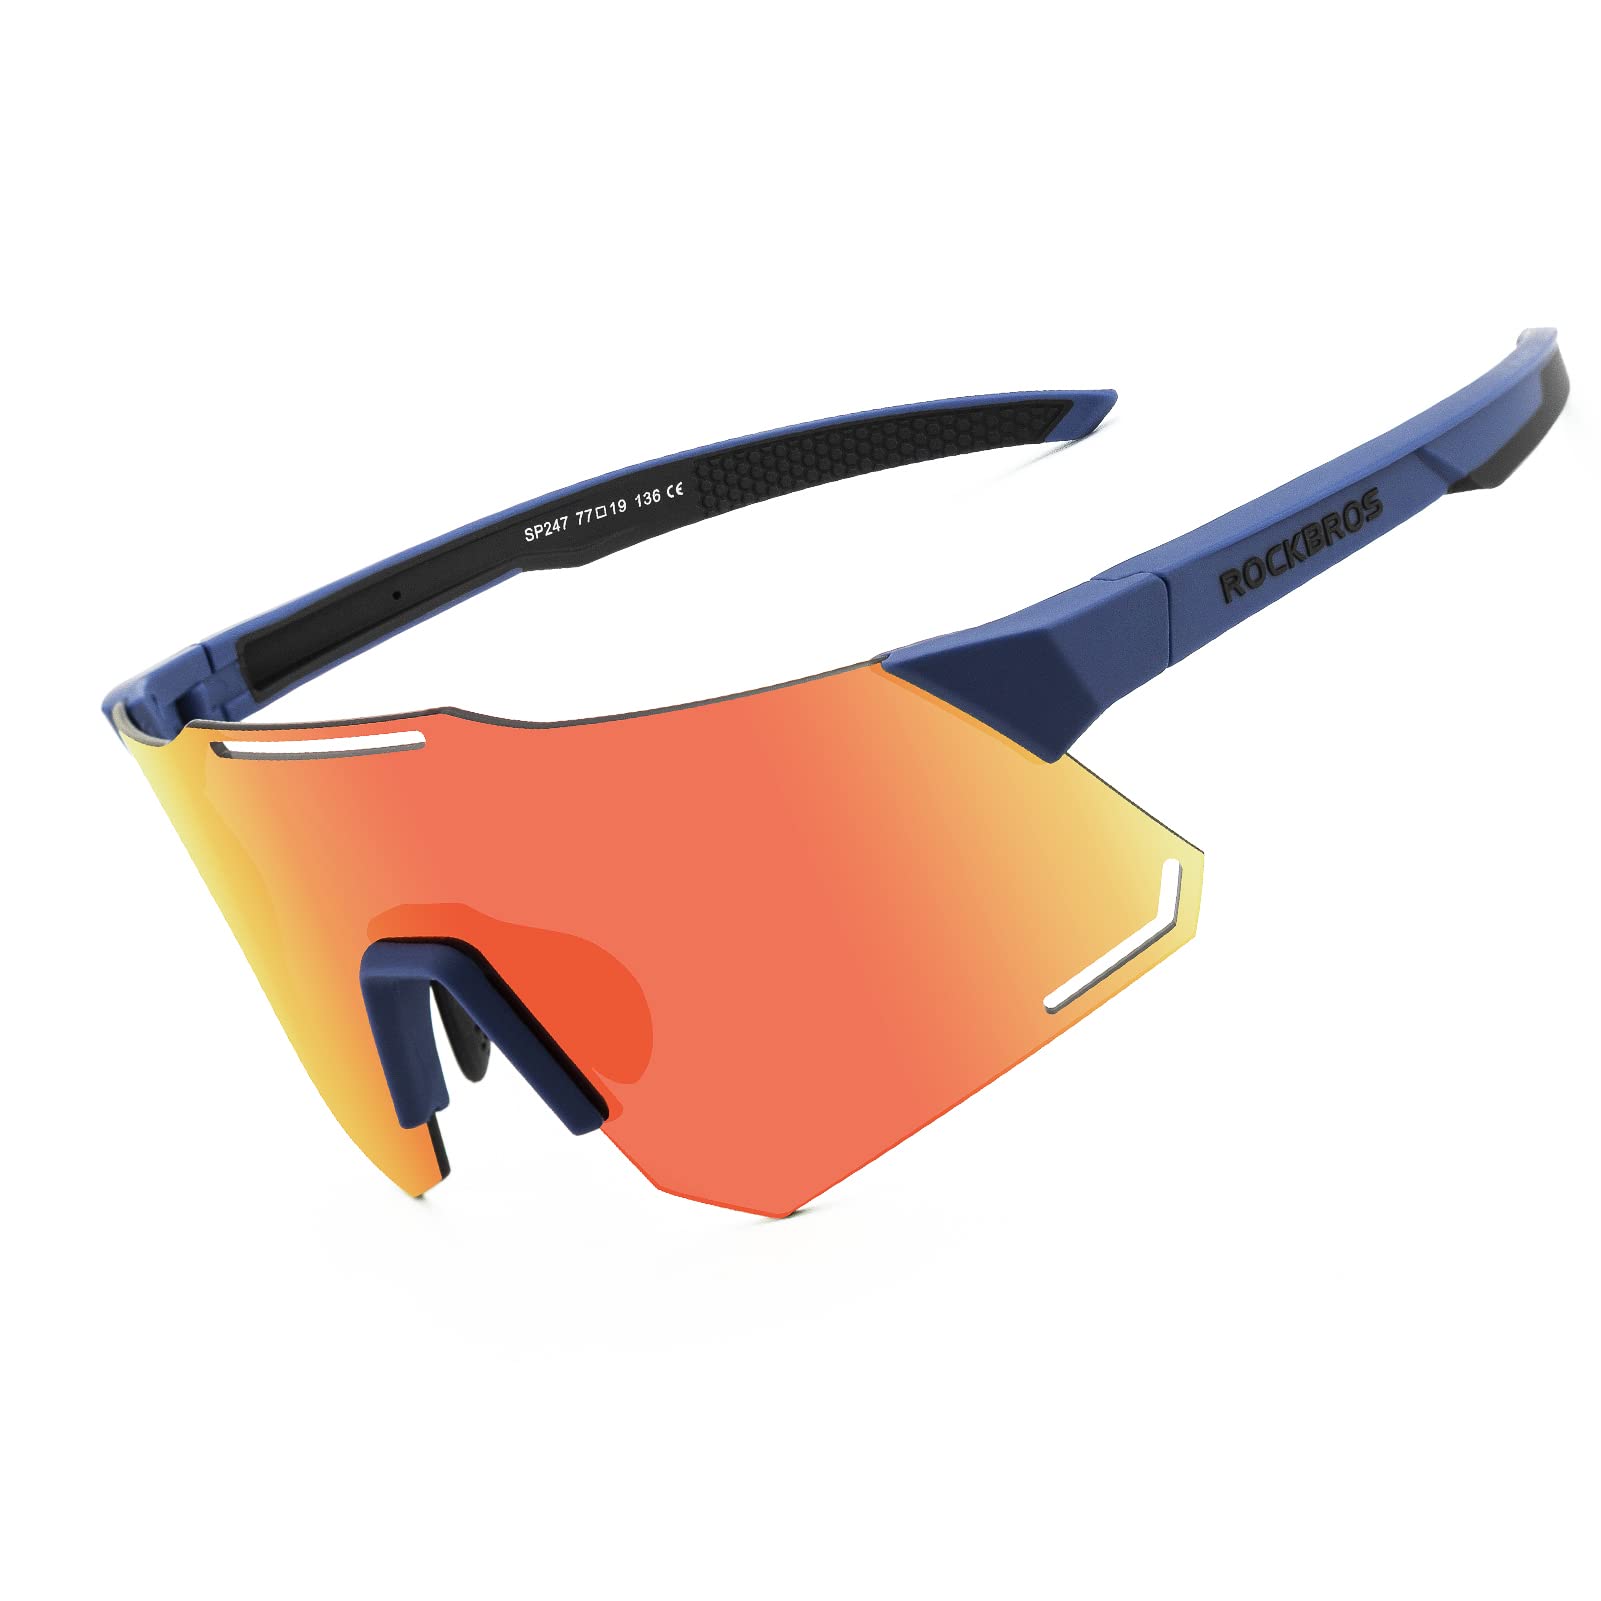 ROCKBROS Cycling Glasses Polarised Sports Glasses UV400 Protection